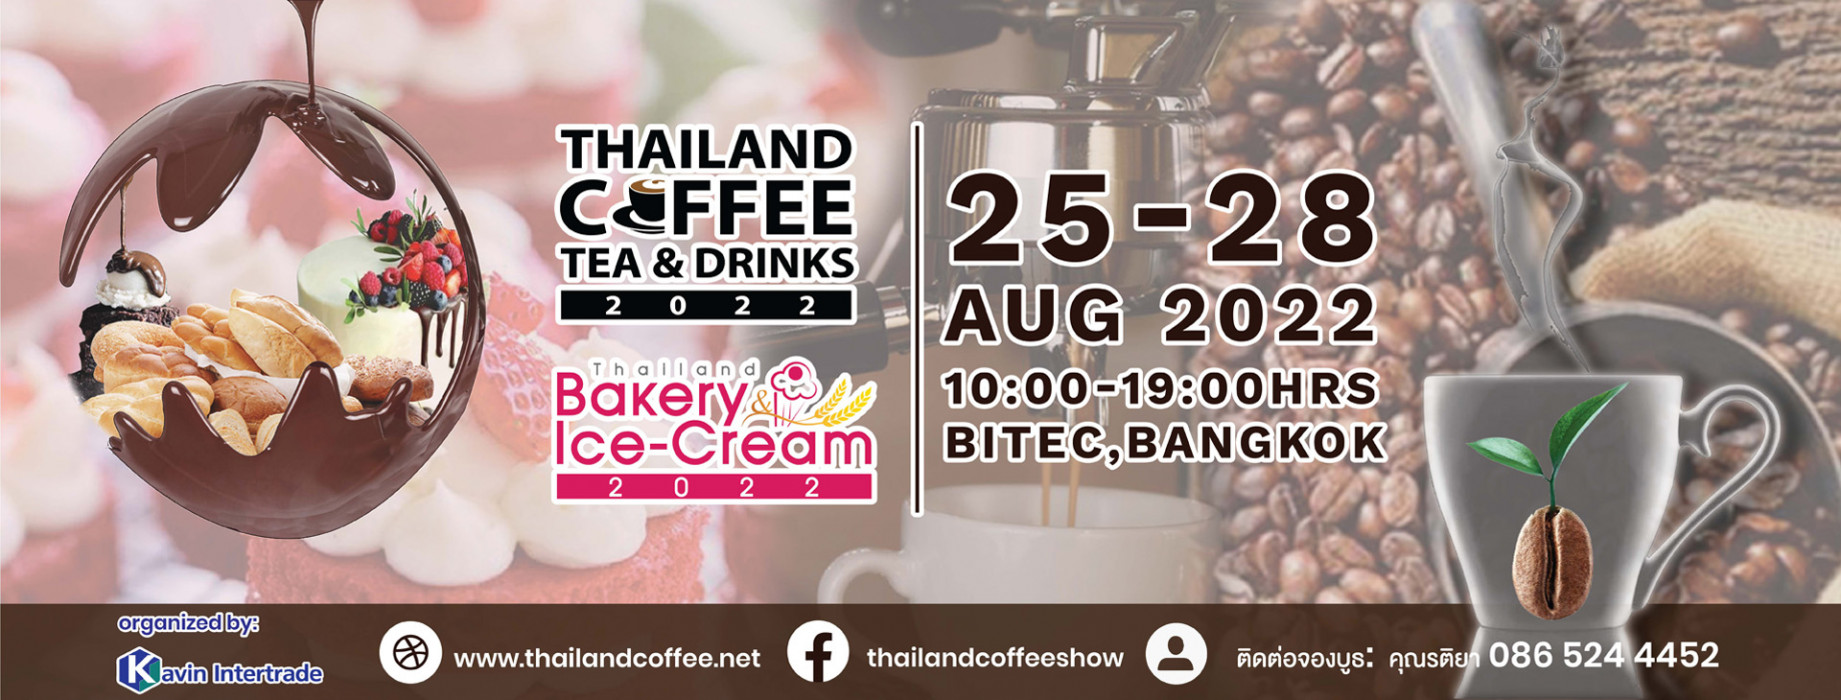 The 16th Thailand Coffee Tea & Drinks